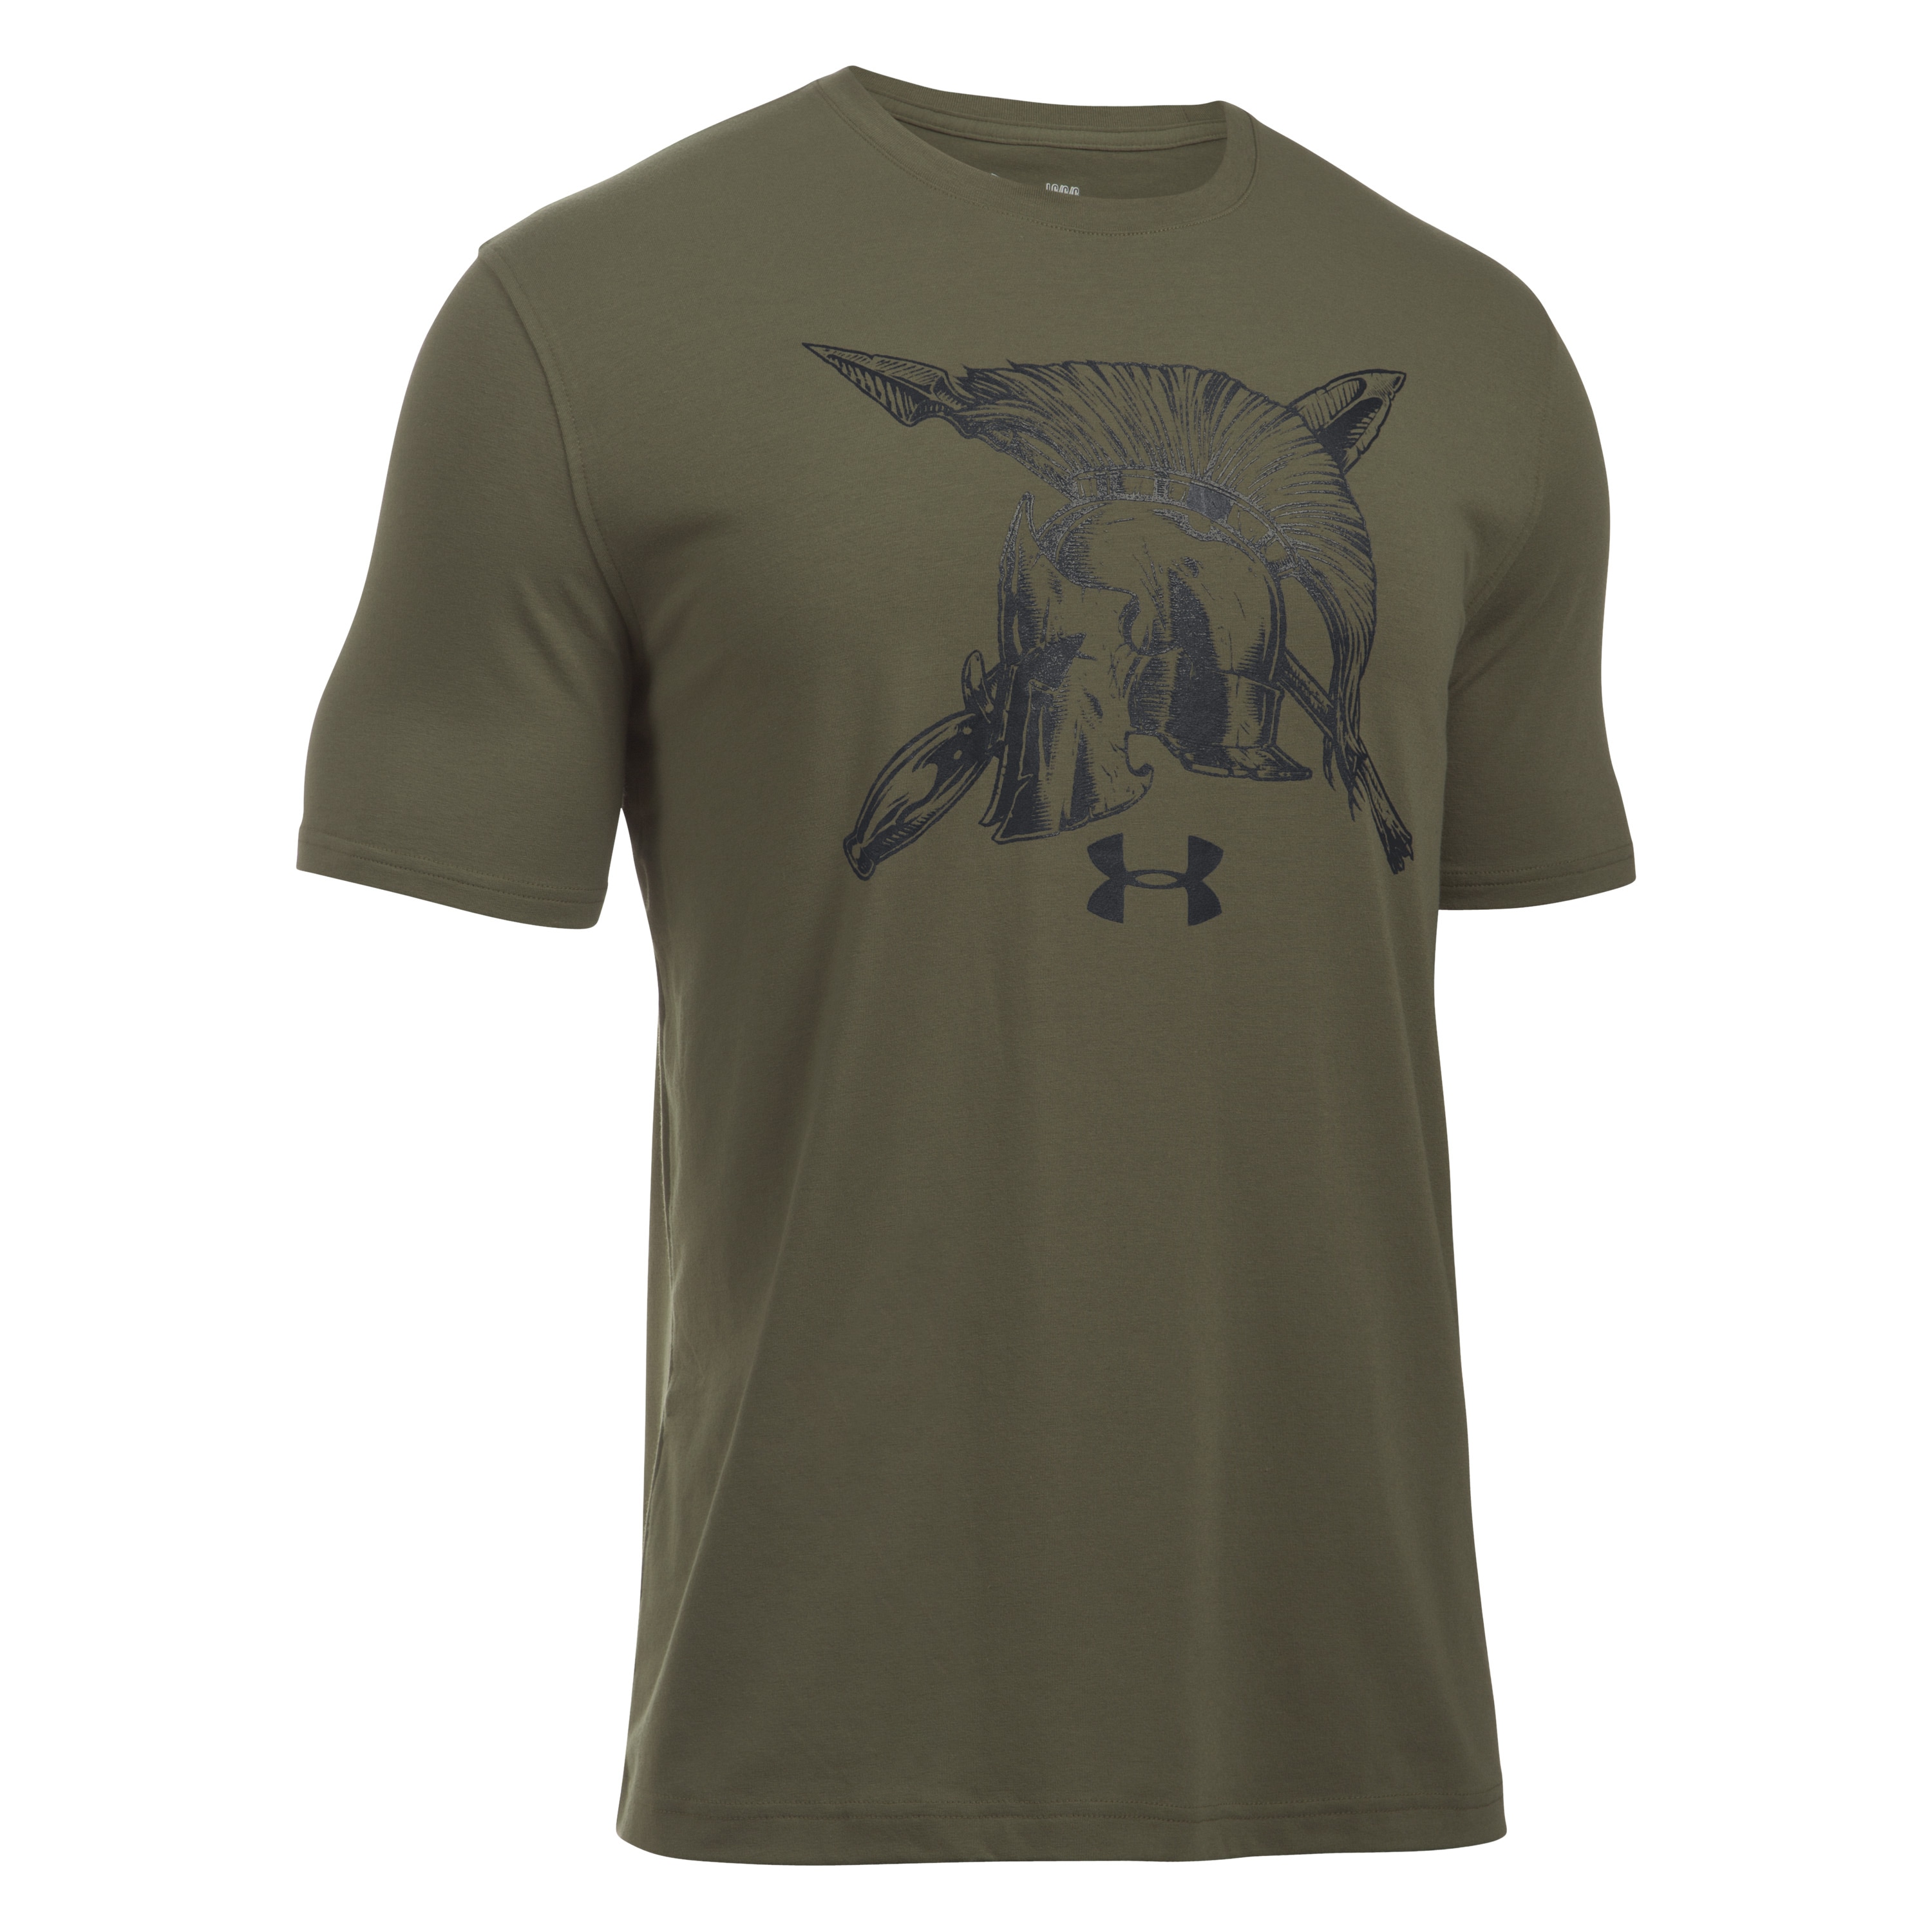 Under Armour T-Shirt Tactical Spartan T 